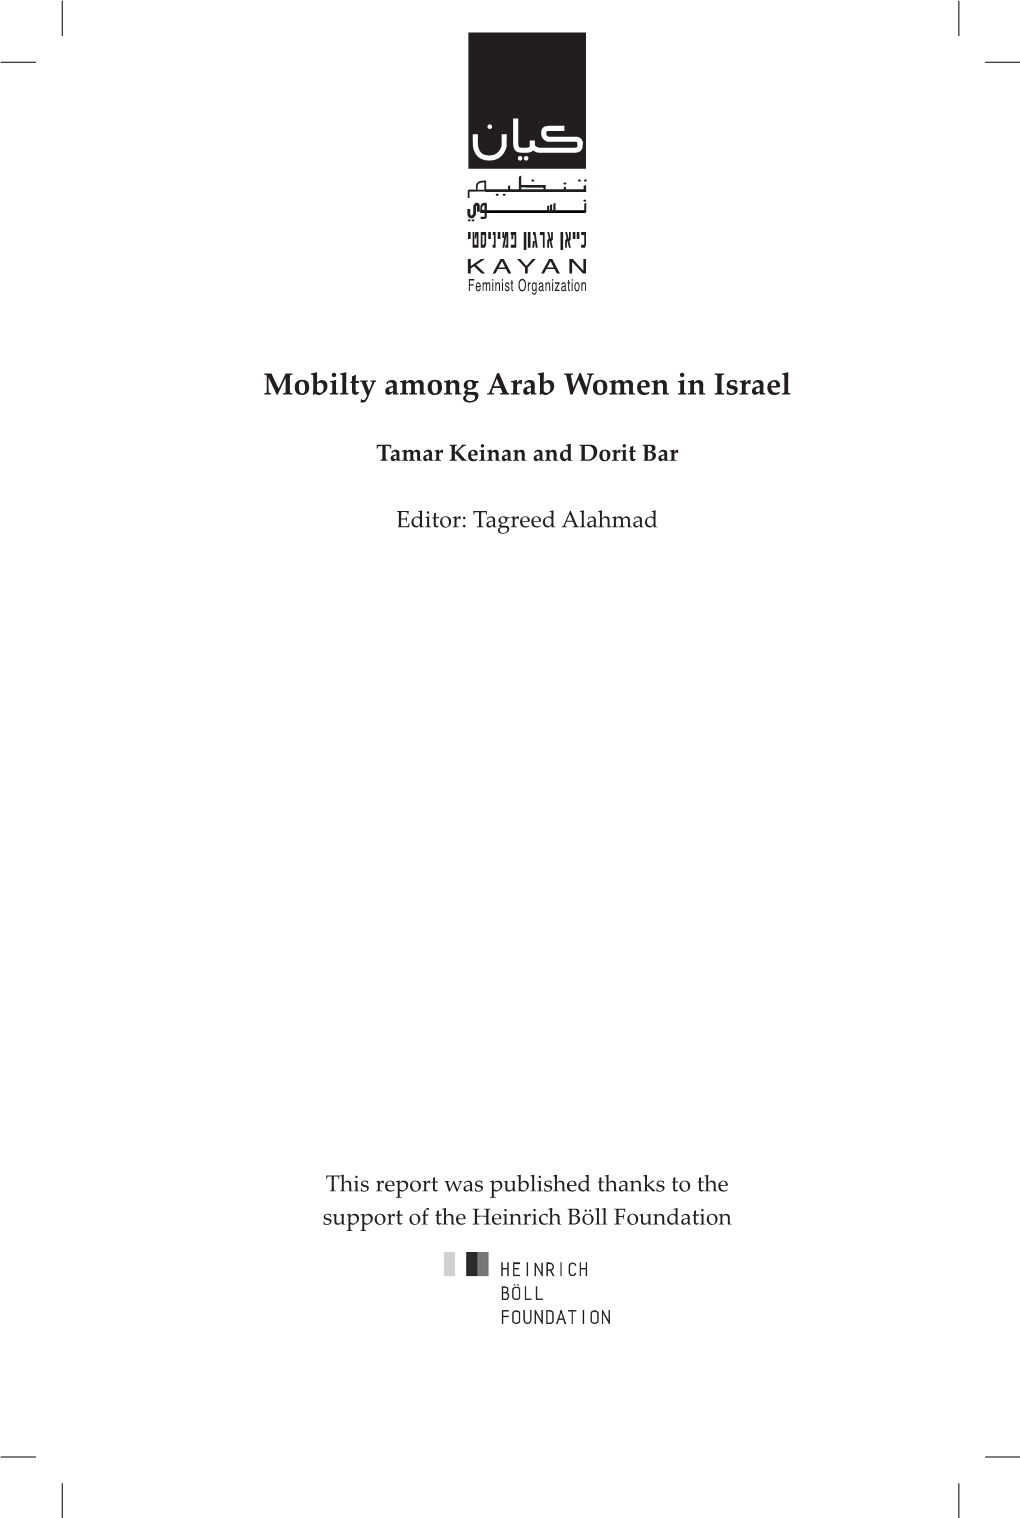 Mobility Among Arab Women in Israel